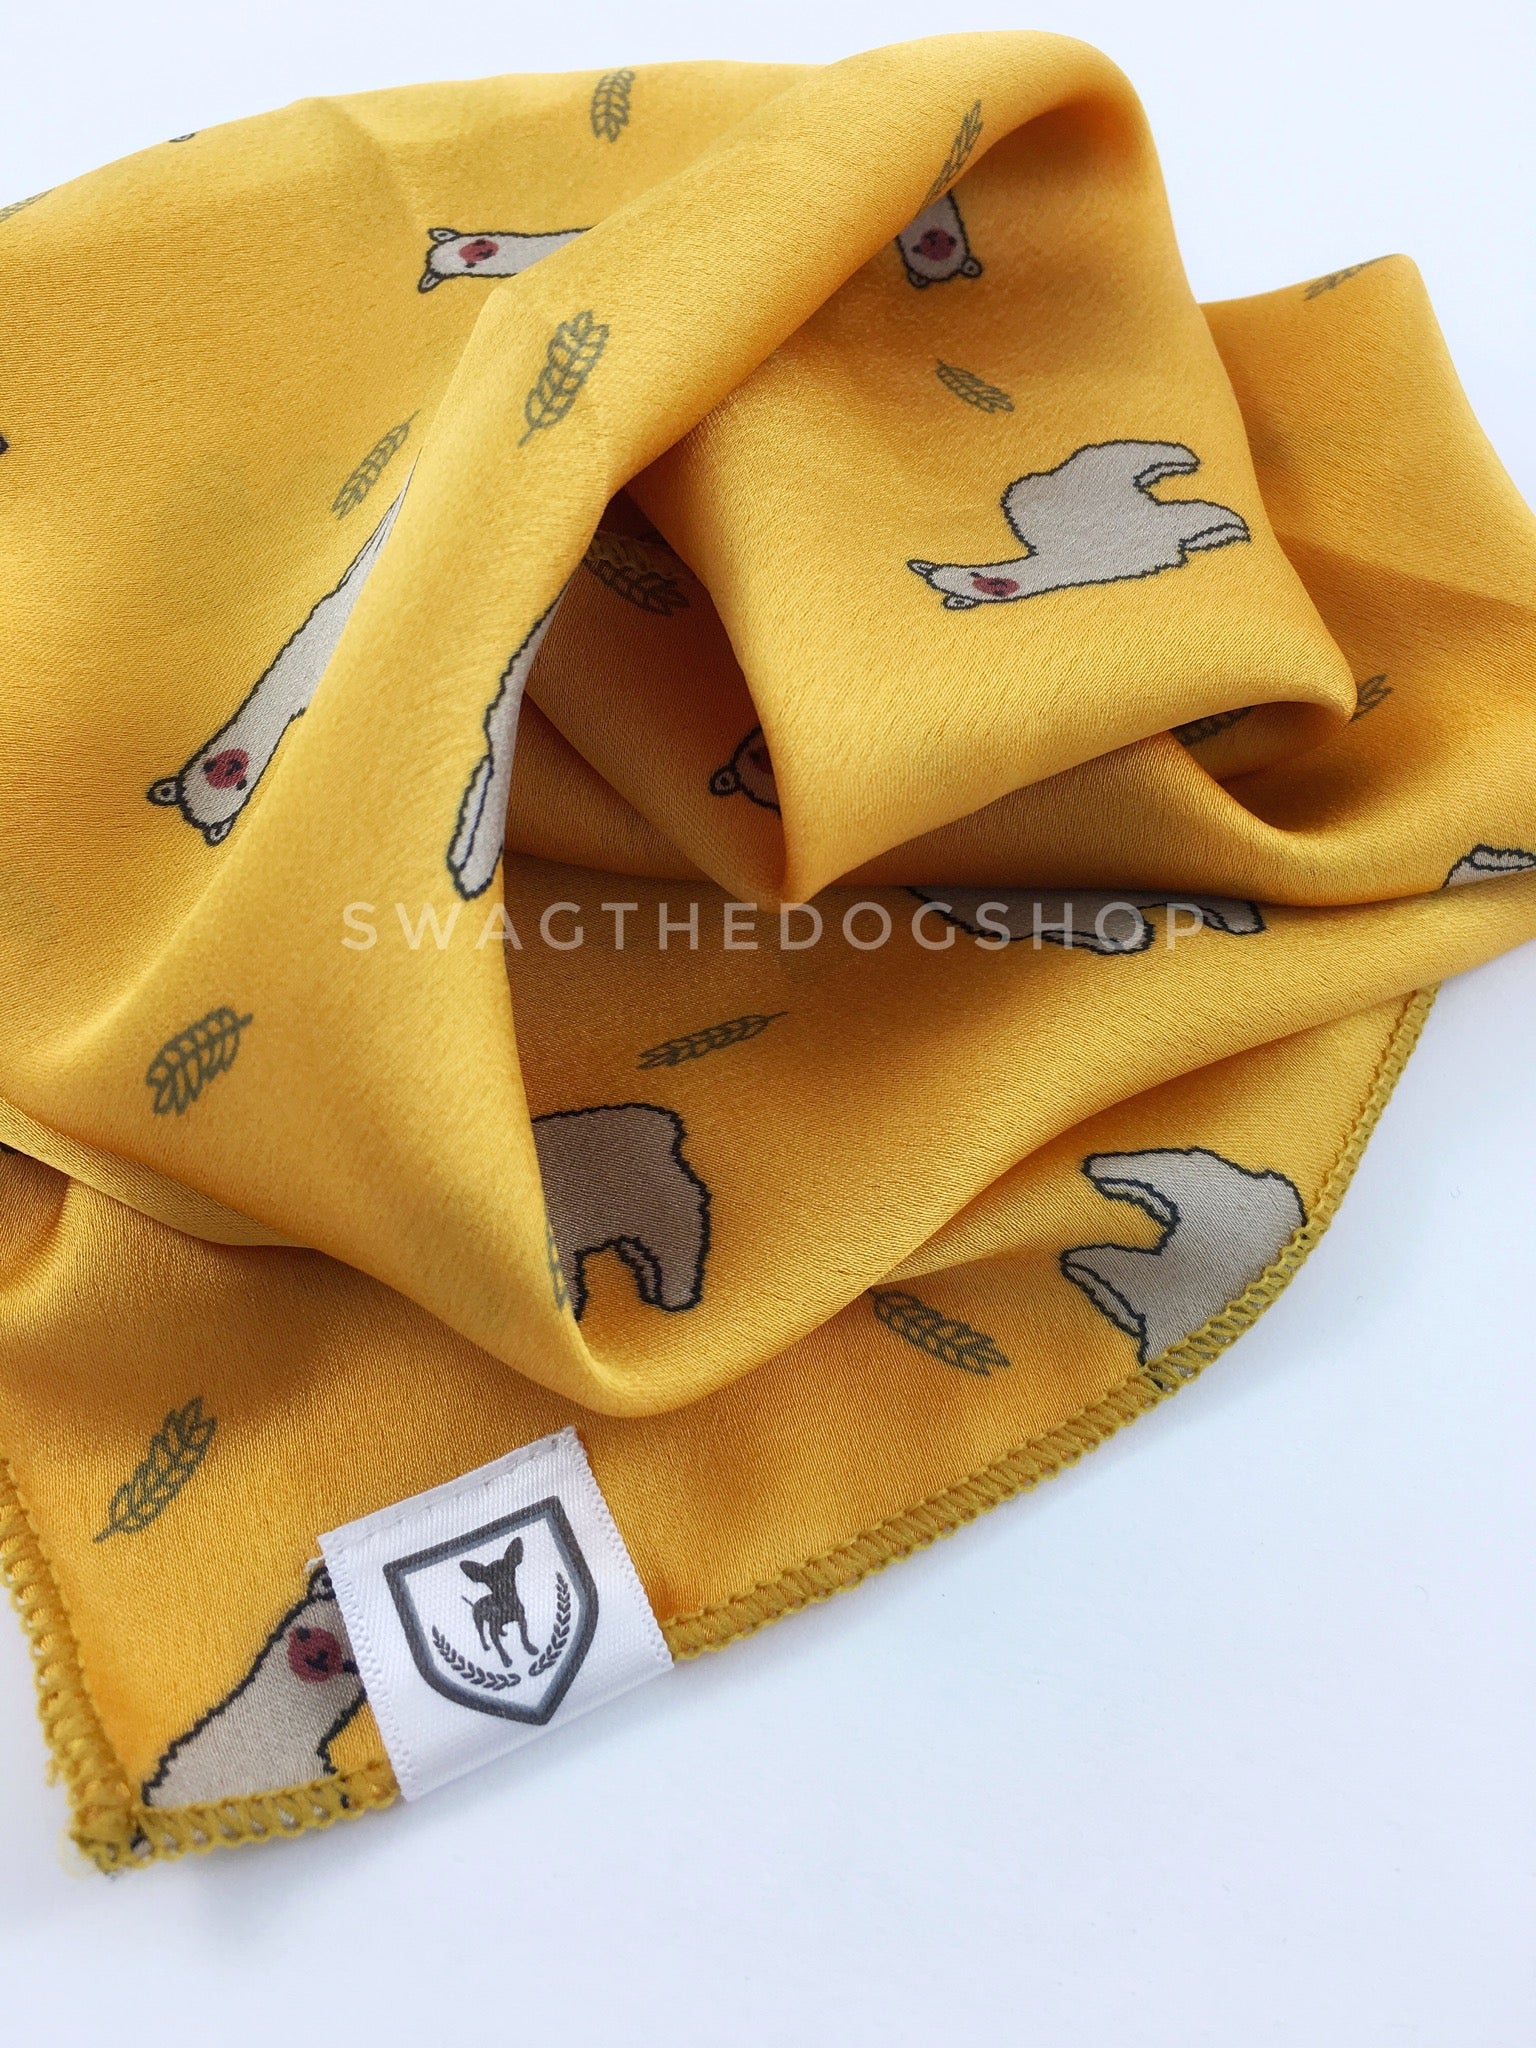 Lorenzo Llama Yellow Swagdana Scarf - Close-up View of Product. Dog Bandana. Dog Scarf.